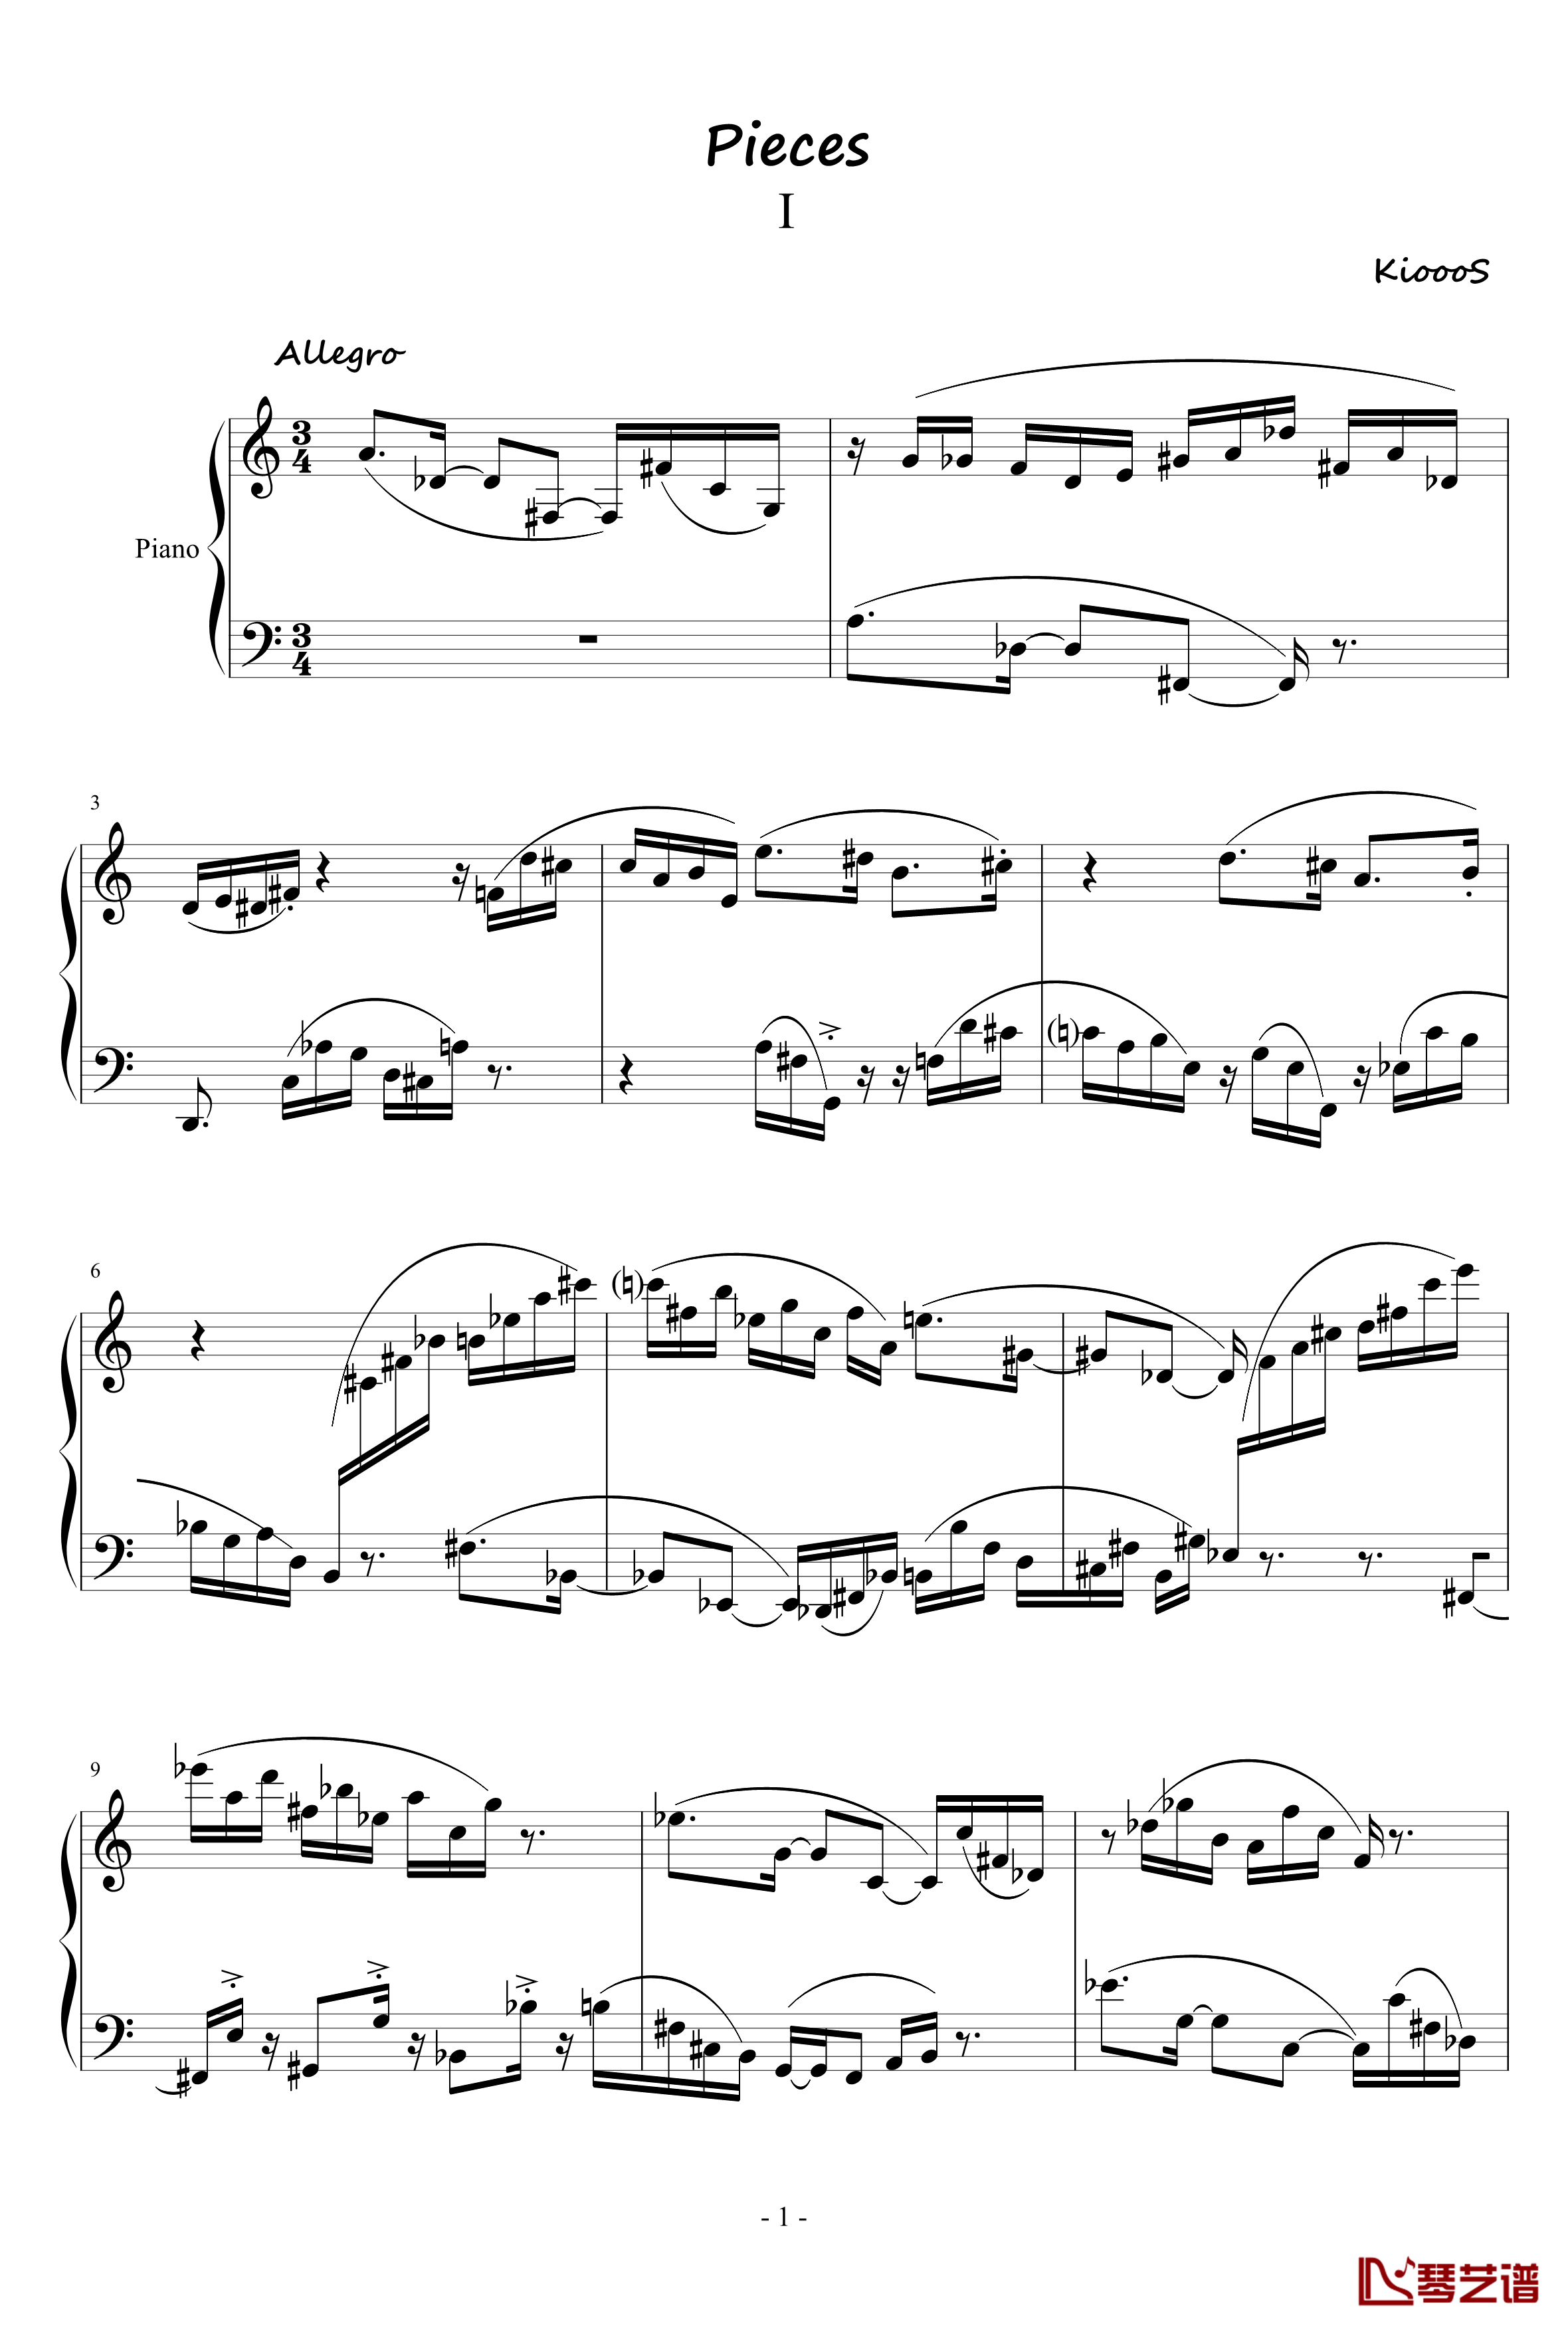 Pieces钢琴谱_01-KioooS1